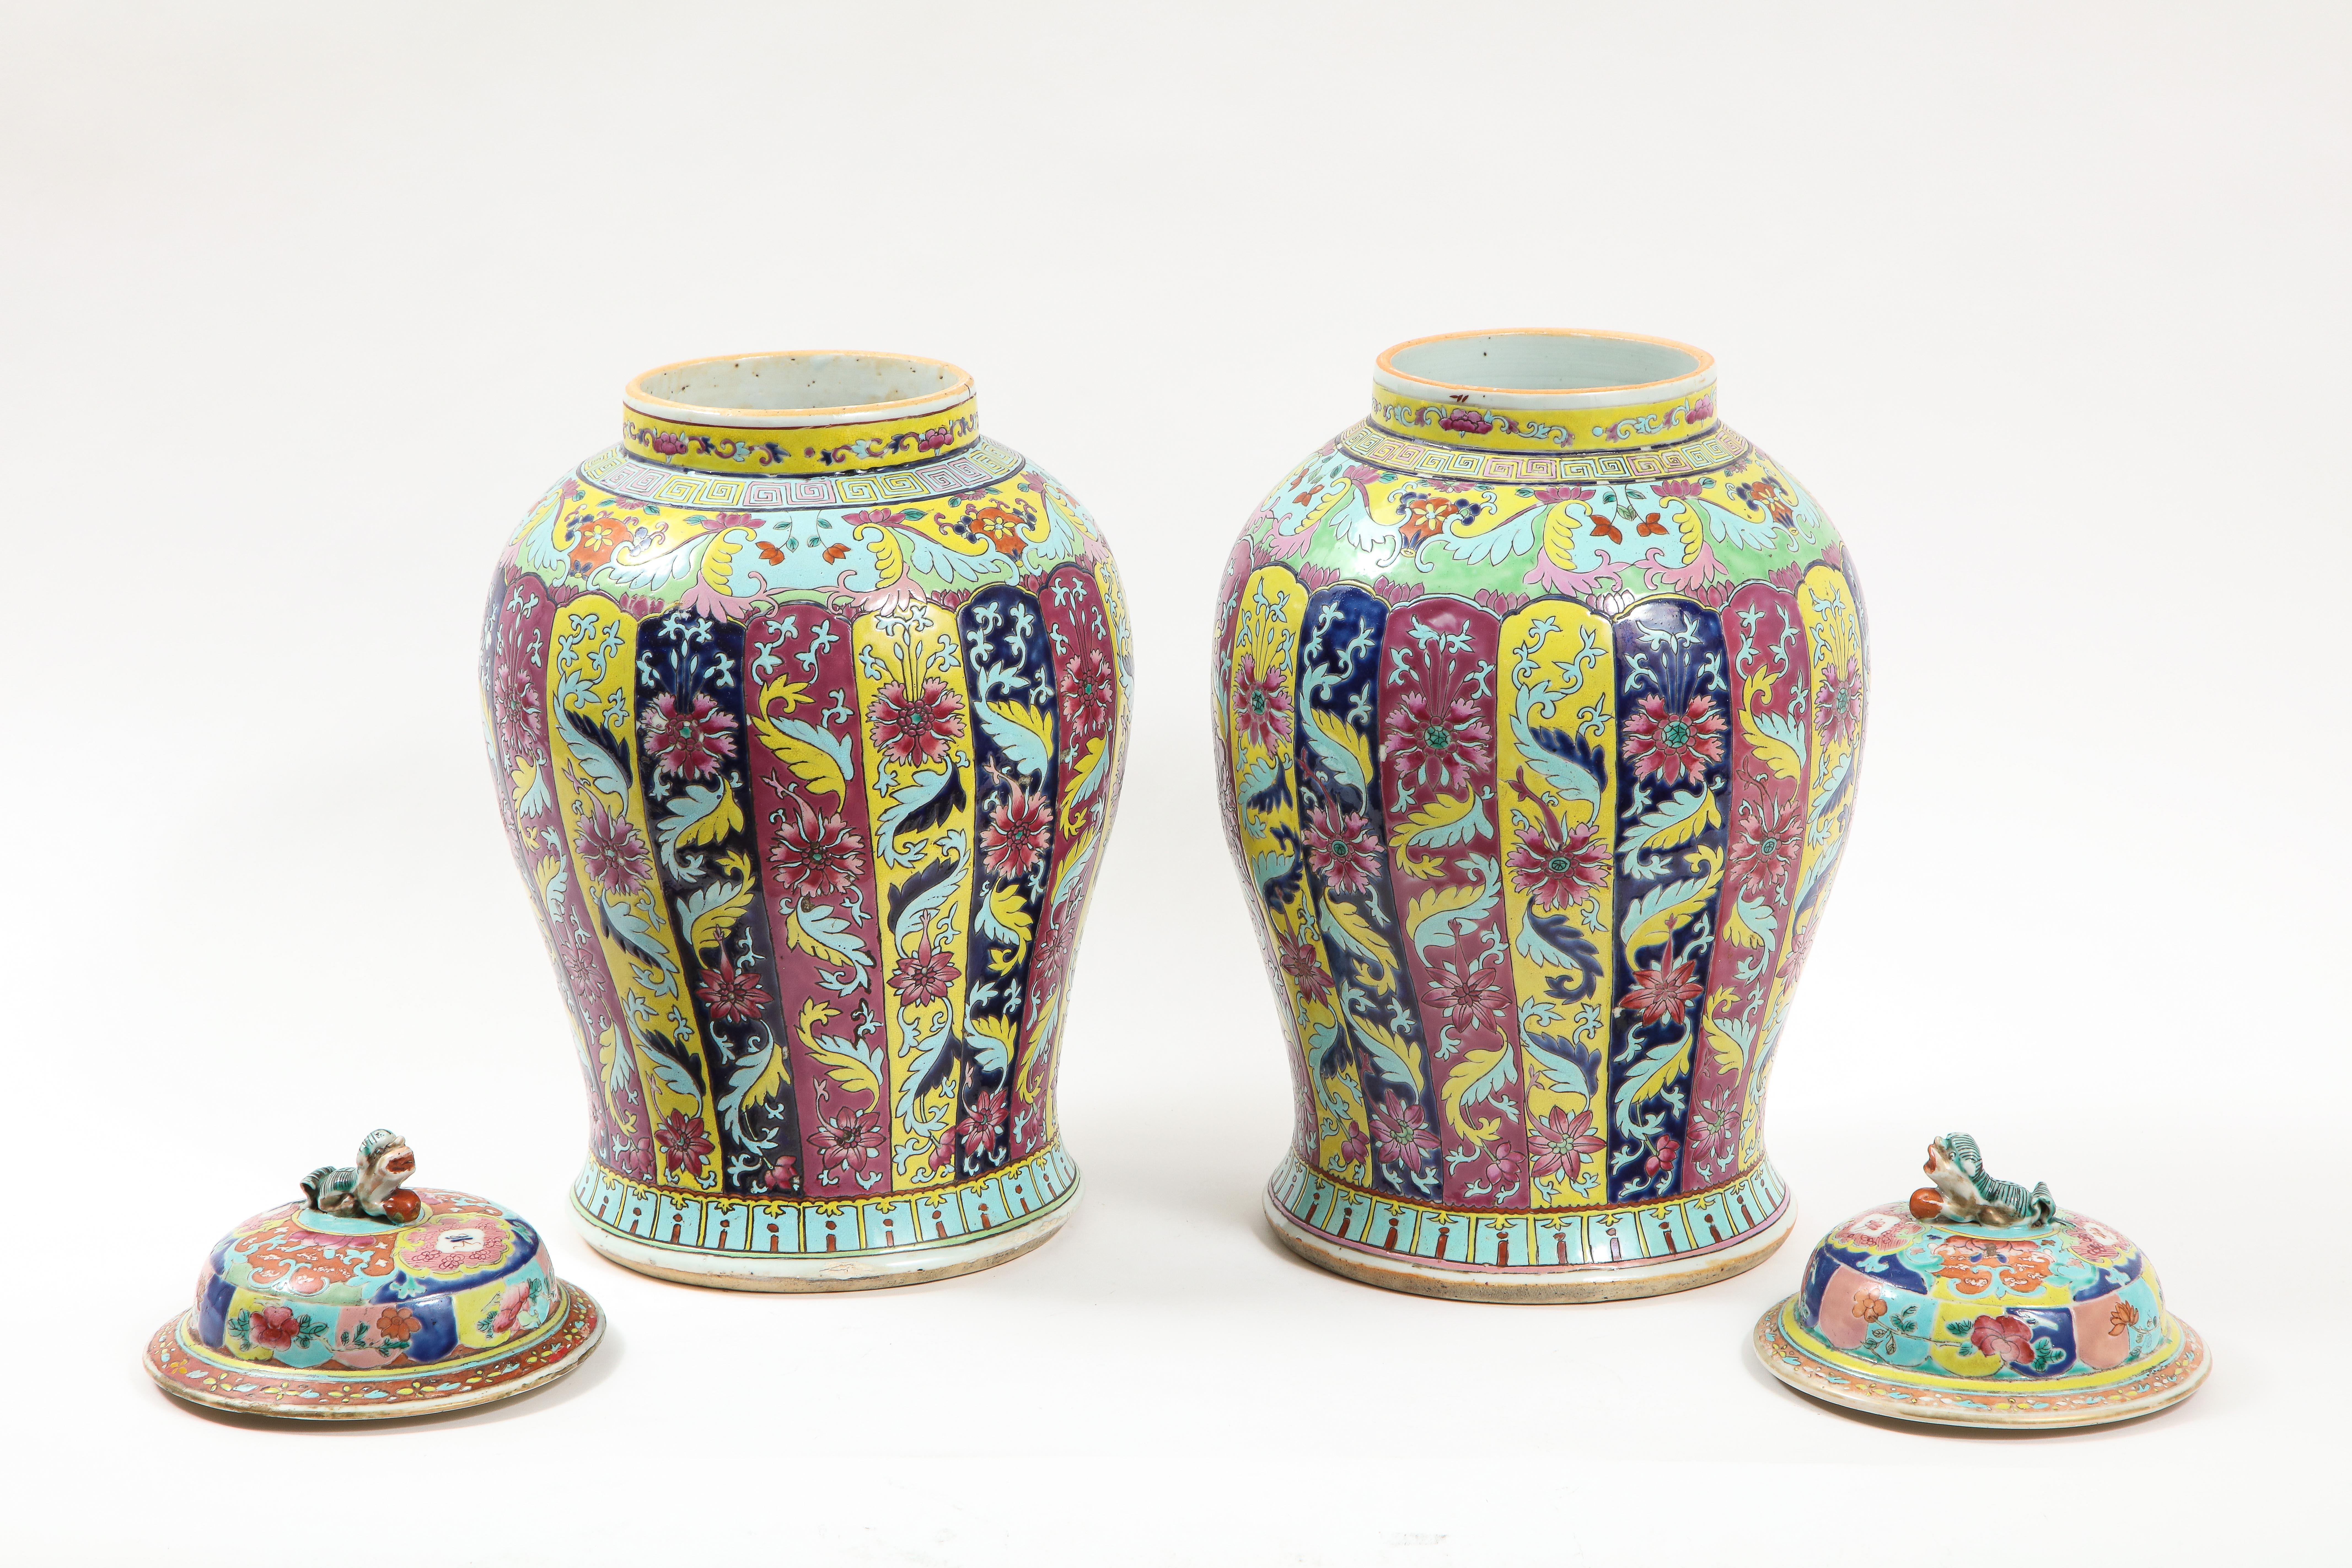 Porcelain Pr. 19th Century Famille Rose Baluster Form Covered Vases, Henry Ford Collection For Sale